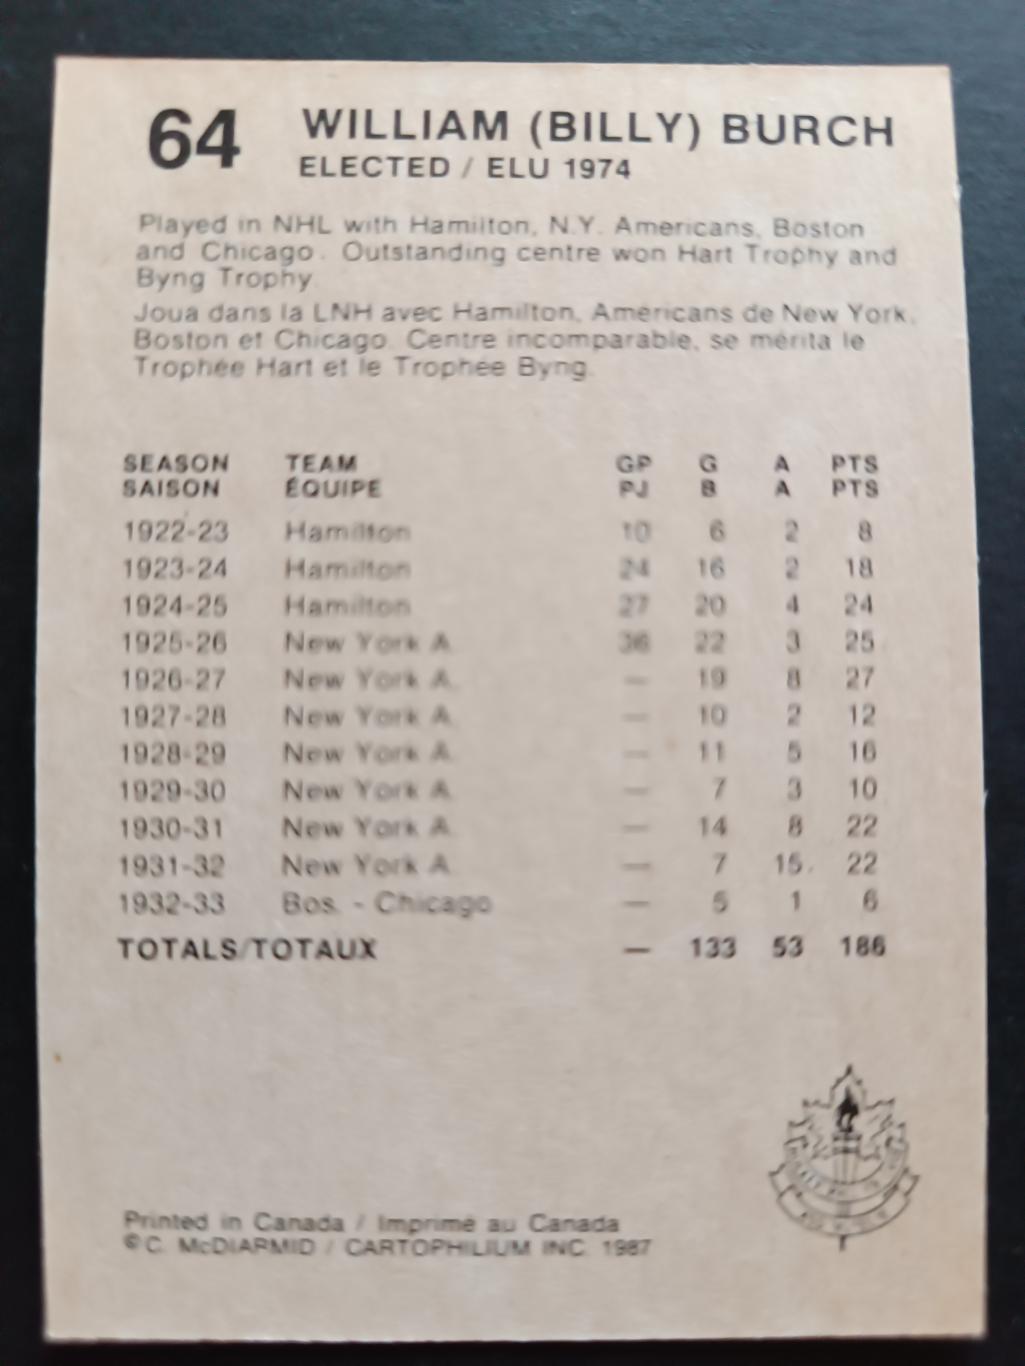 ХОККЕЙ КАРТОЧКА НХЛ CARTOPHILIUM HALL OF FAME 1987 NHL WILLIAM BILLY BURCH #64 1